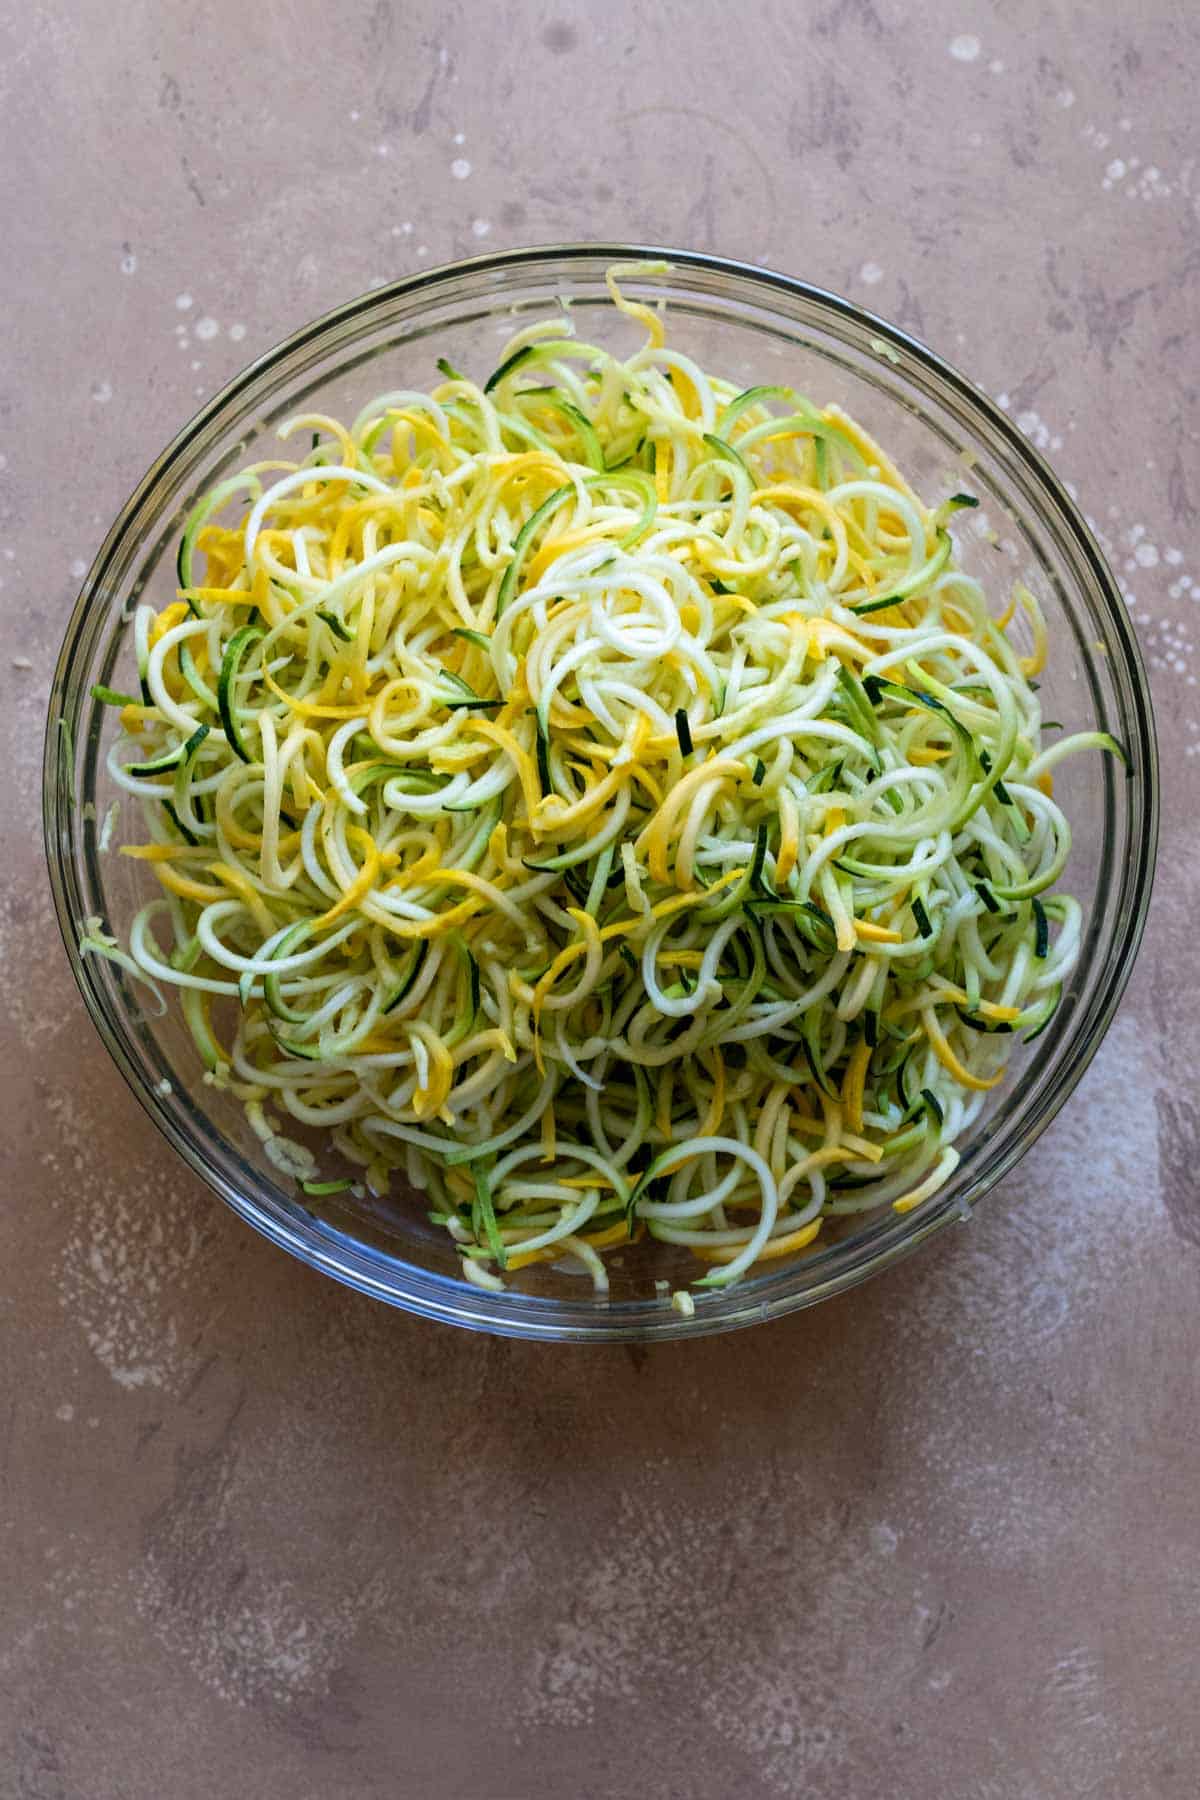 Spiralized zucchini and summer squash in glass bowl.